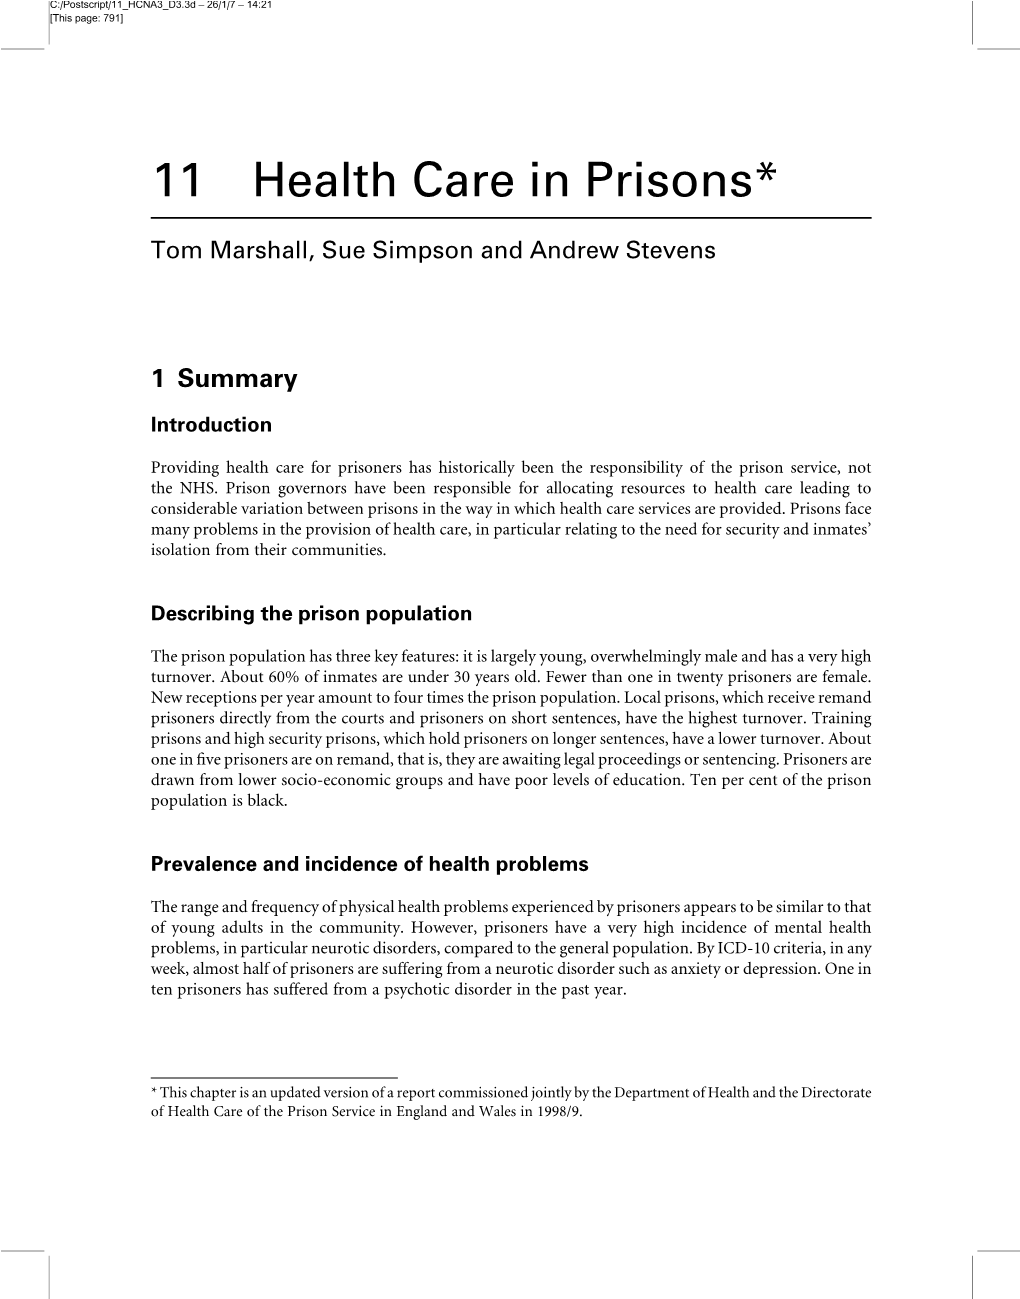 11 Health Care in Prisons*